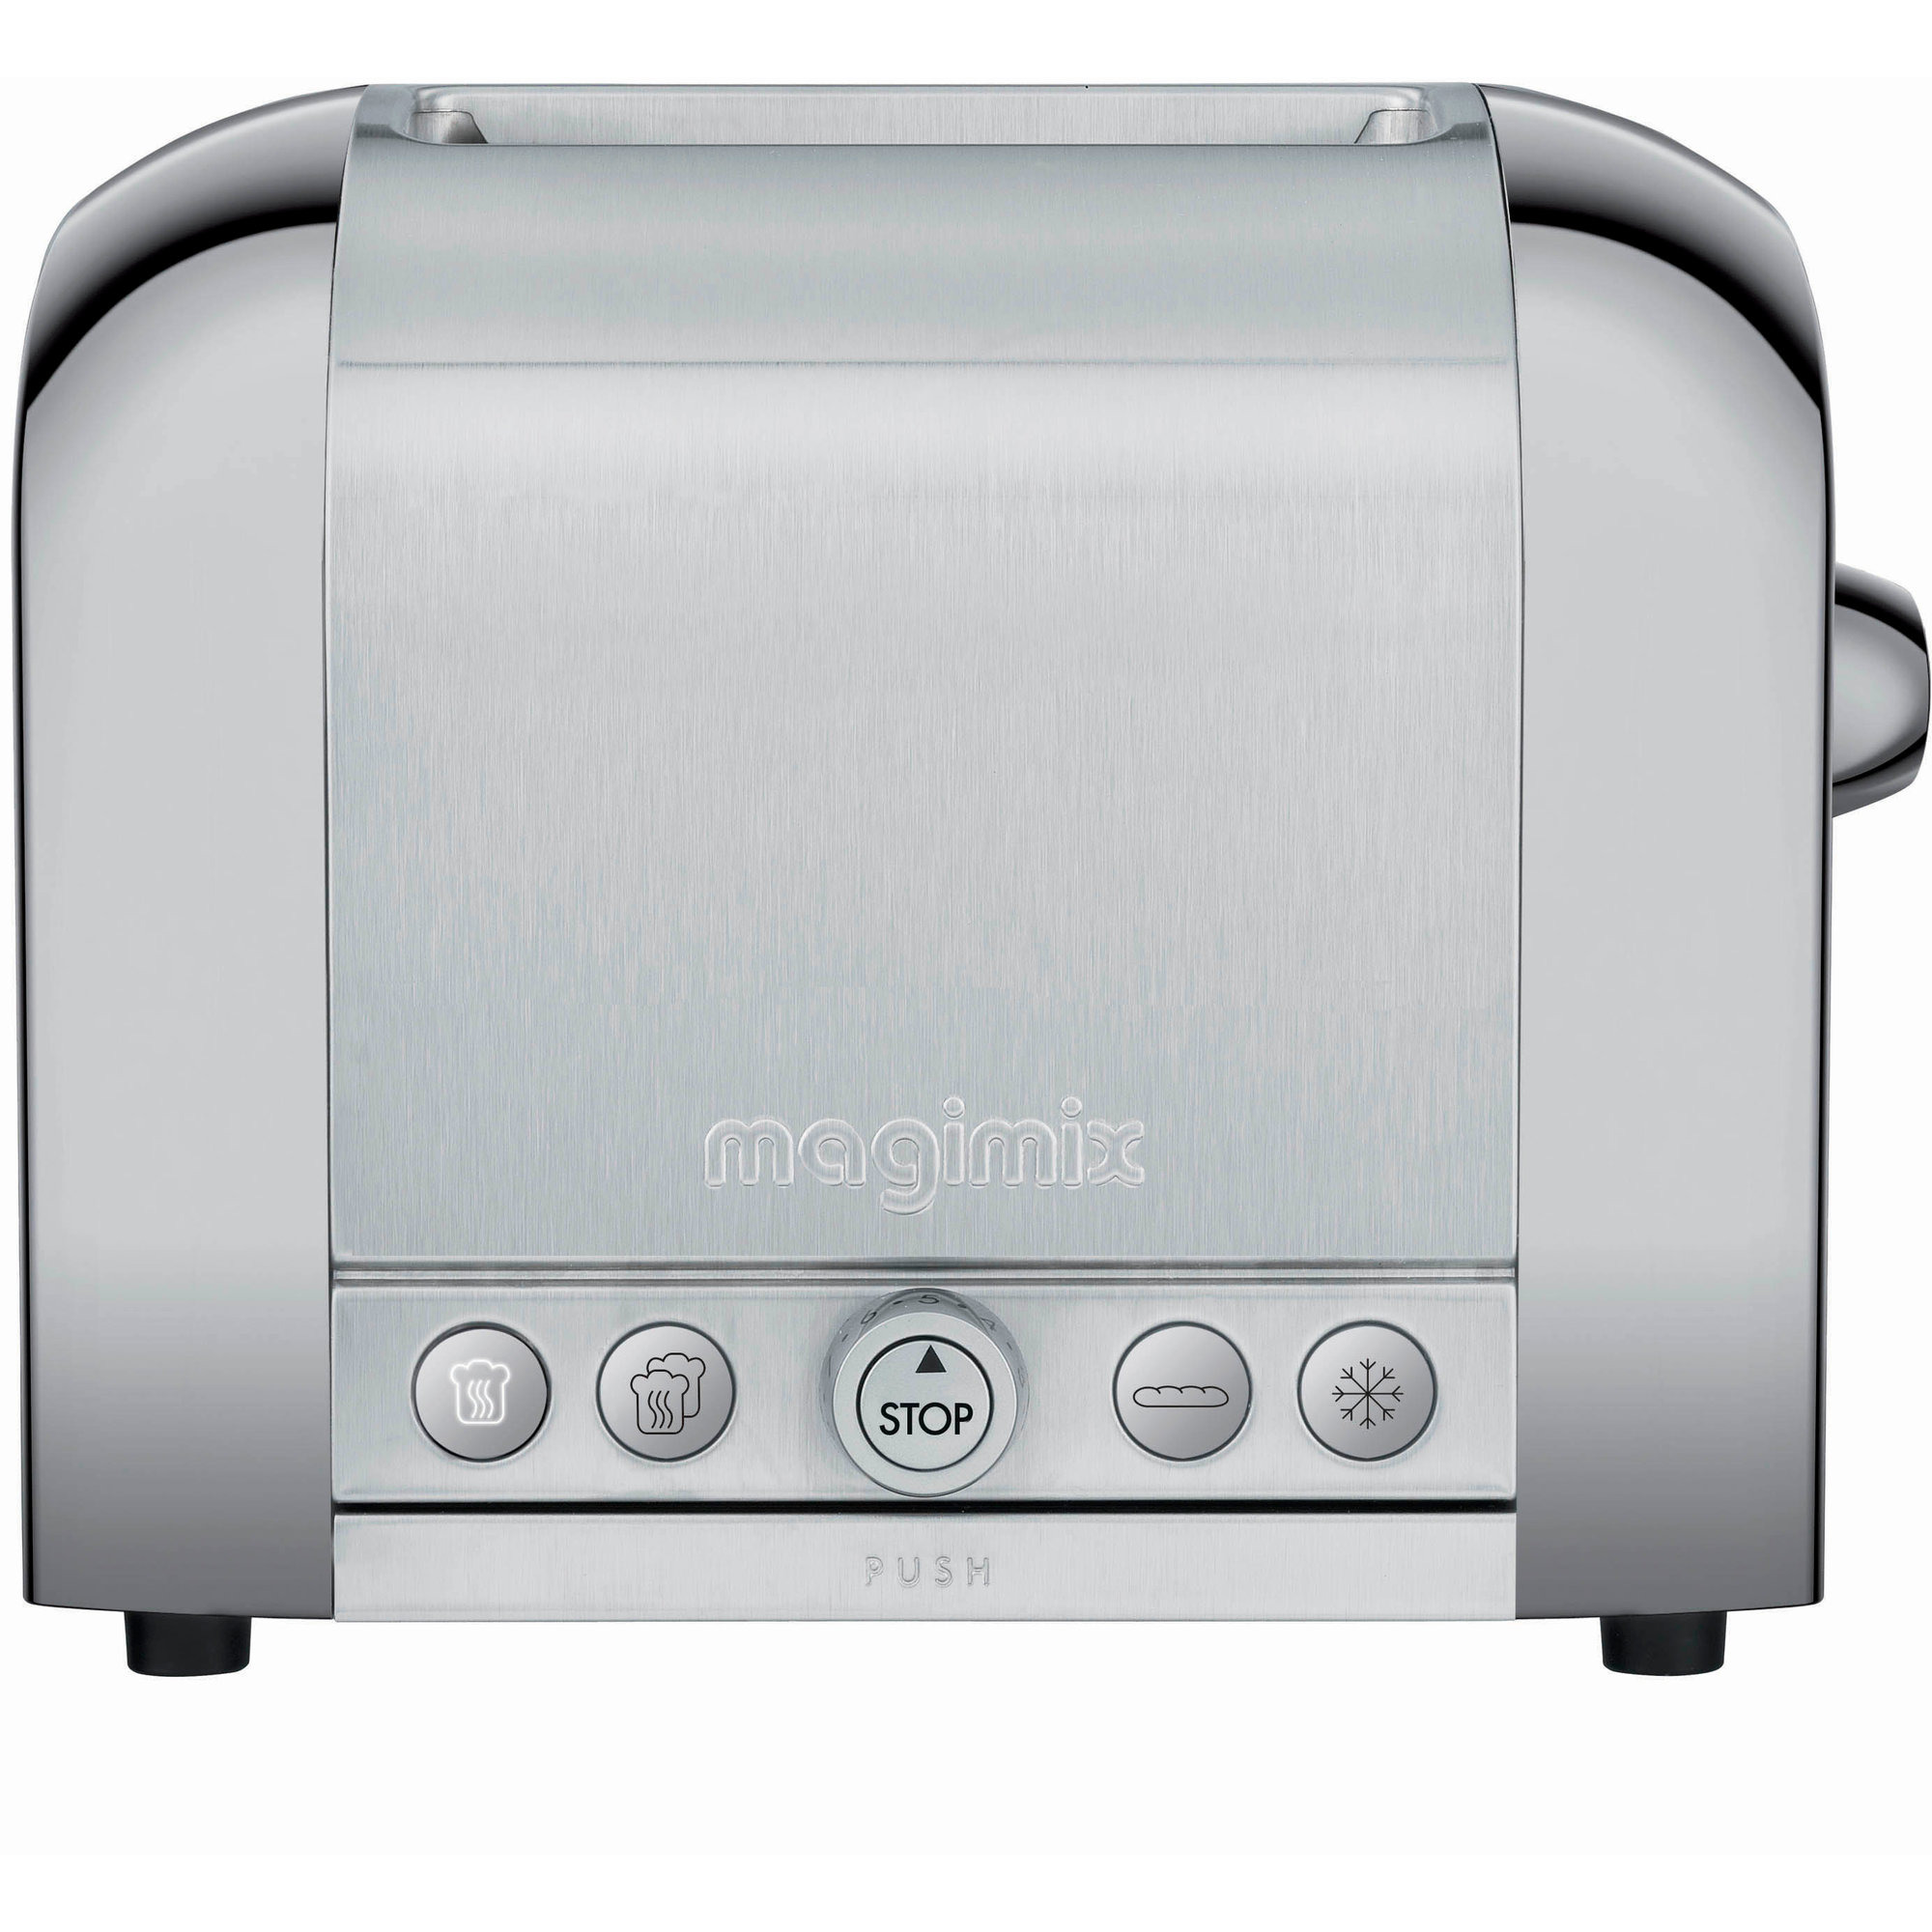 Magimix Vision toaster